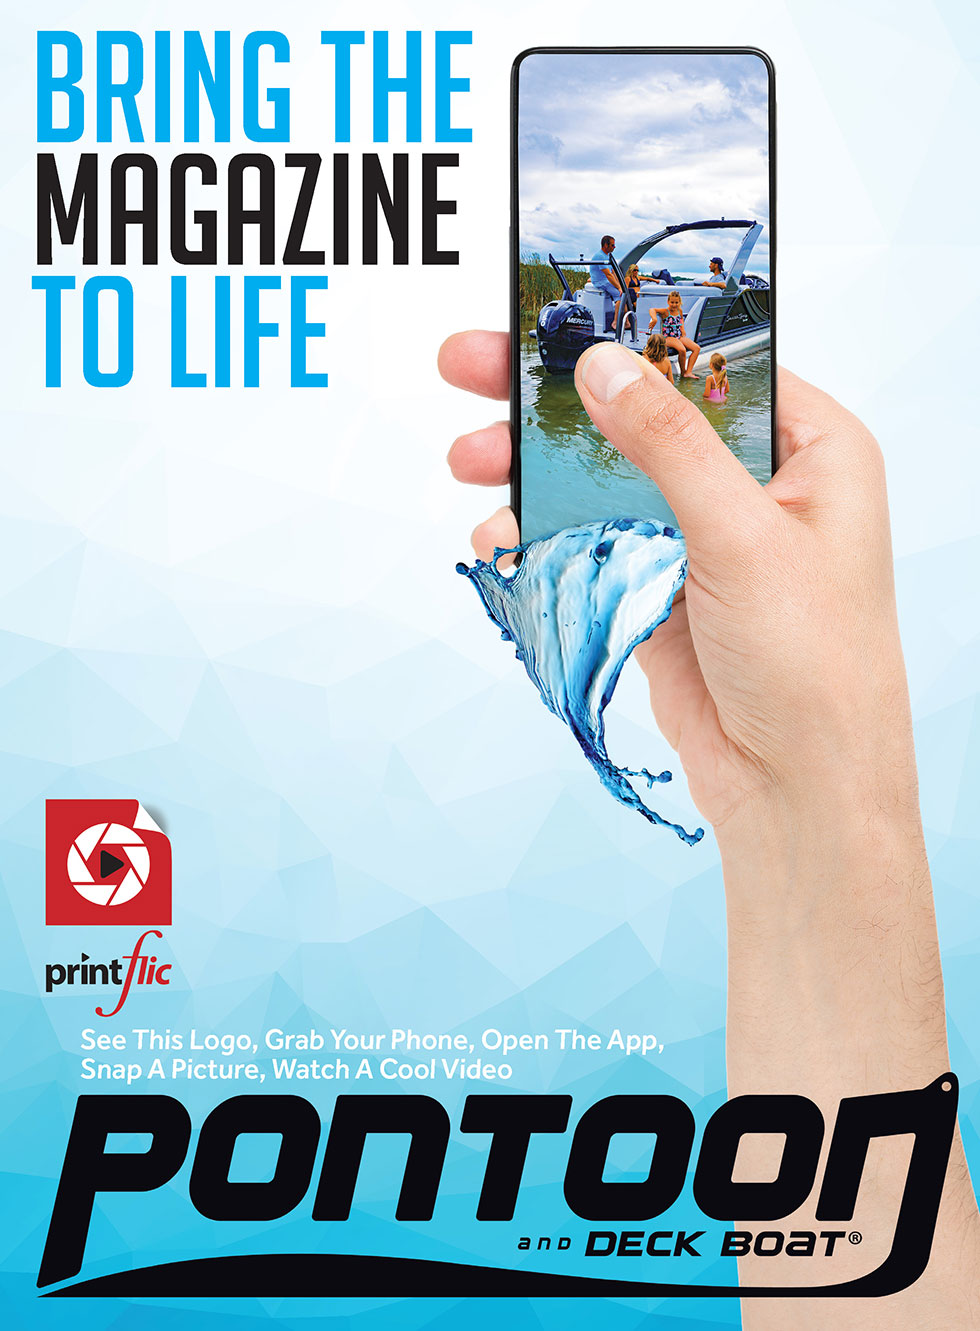 Pontoon and Deck Boat Printflic App Advertisement